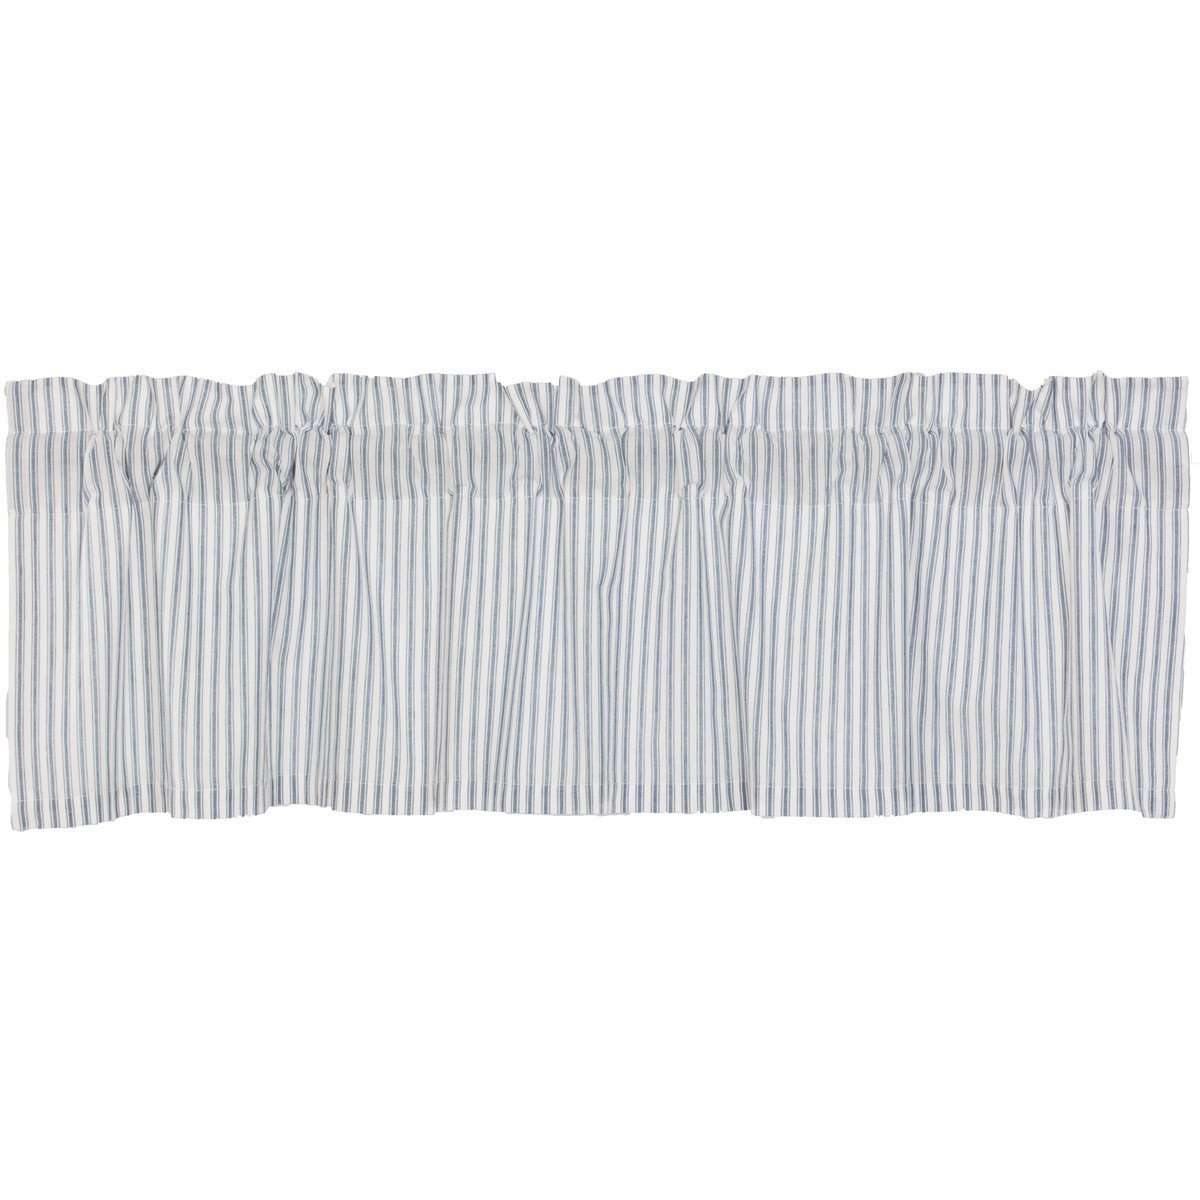 Sawyer Mill Blue Ticking Stripe Valance Curtain 16x60 VHC Brands - The Fox Decor